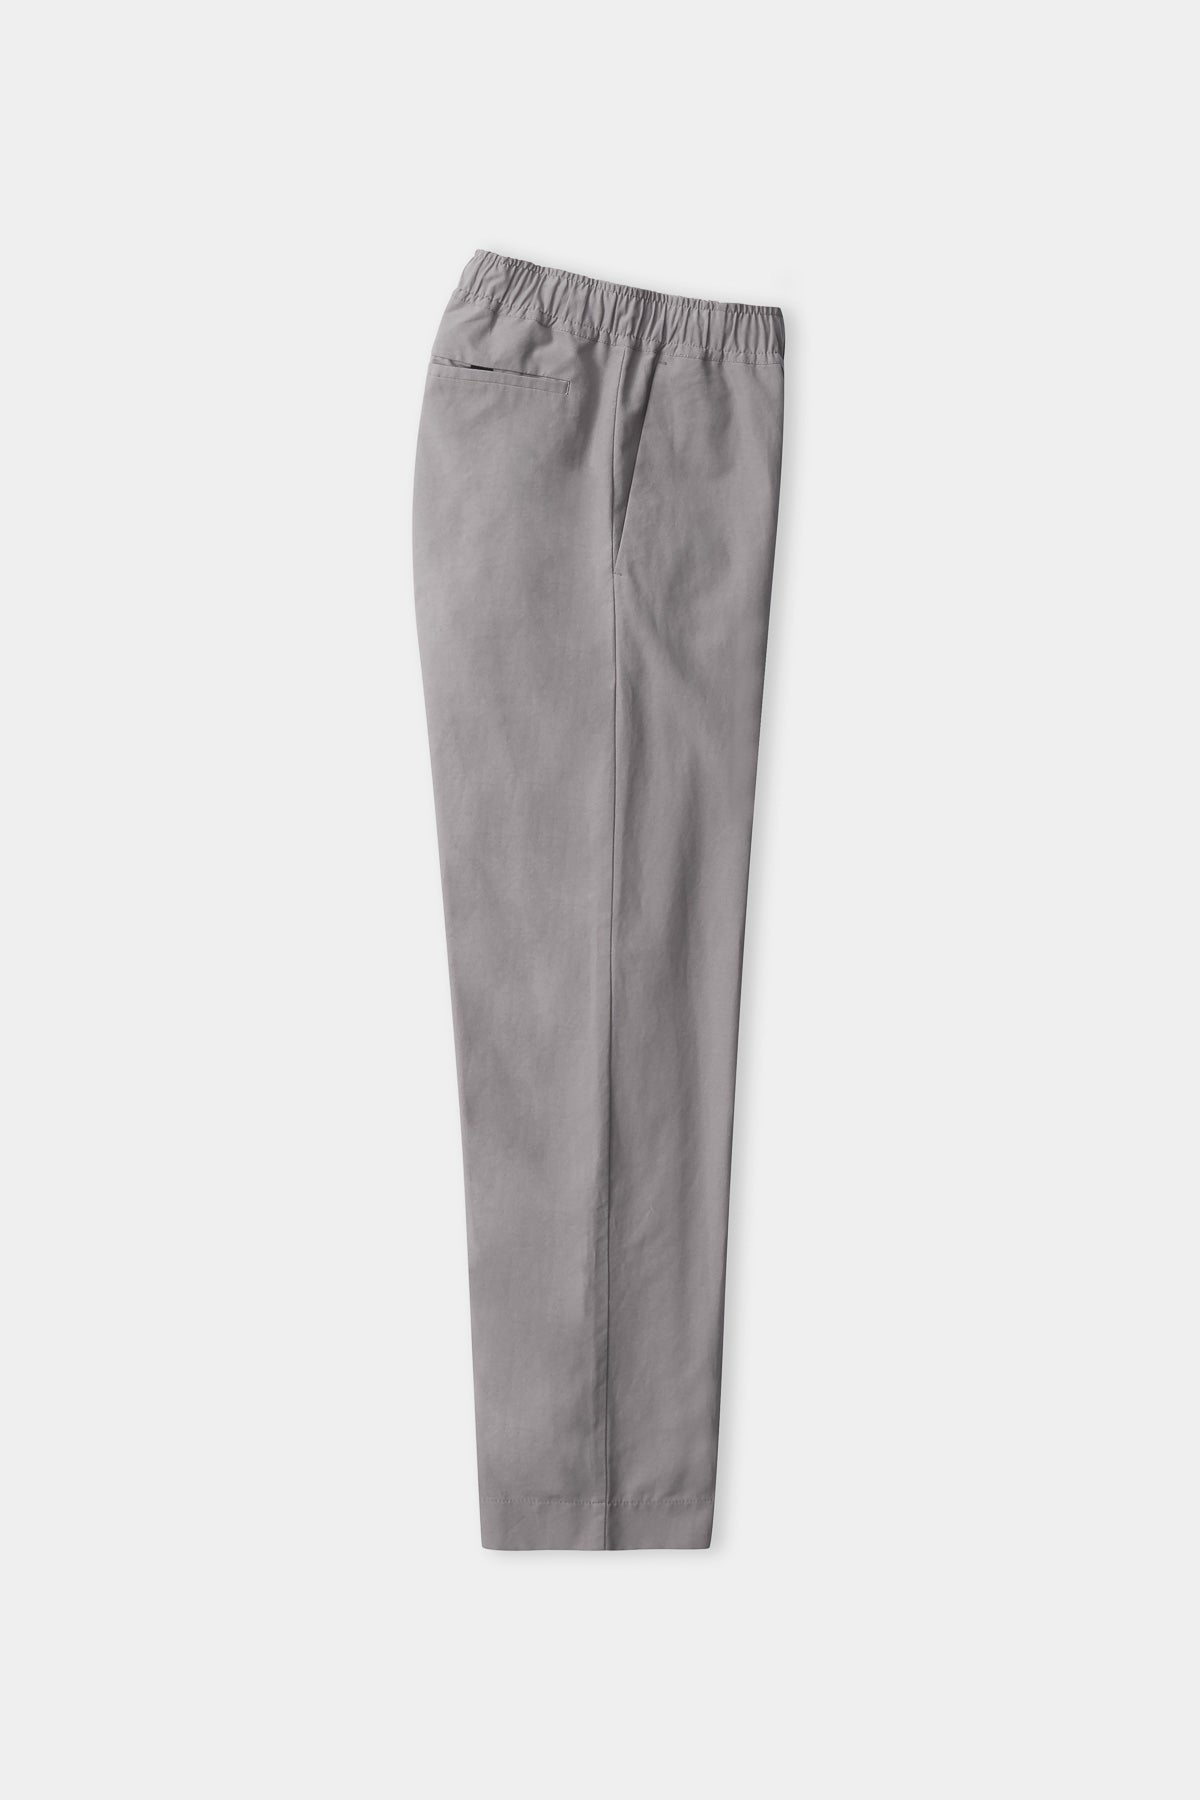 MAX trousers stone grey tencel